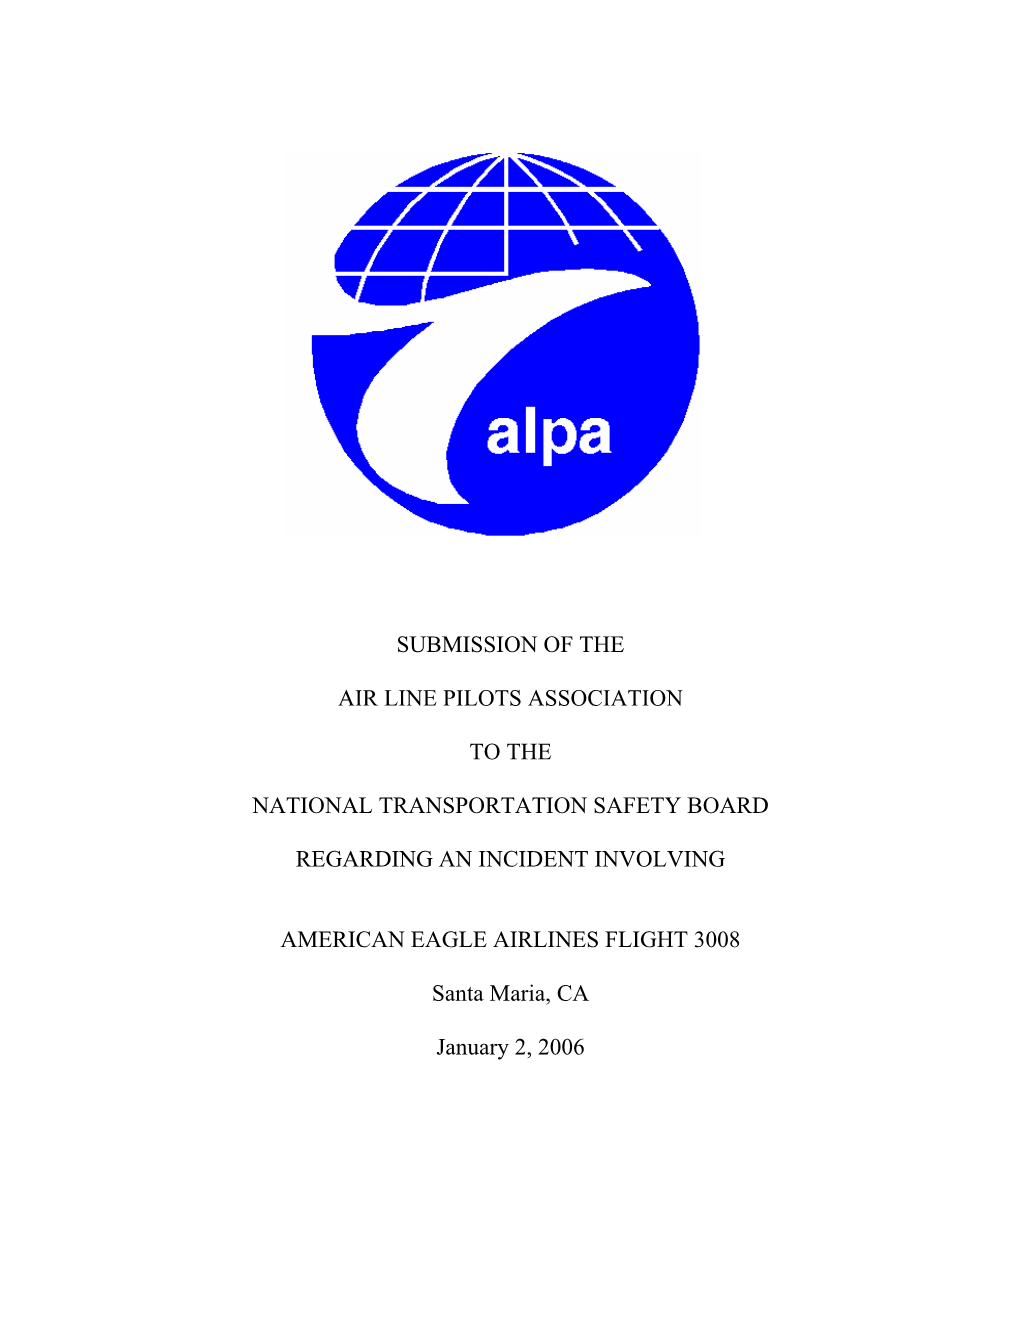 American Eagle Flight 3008 ALPA Submission